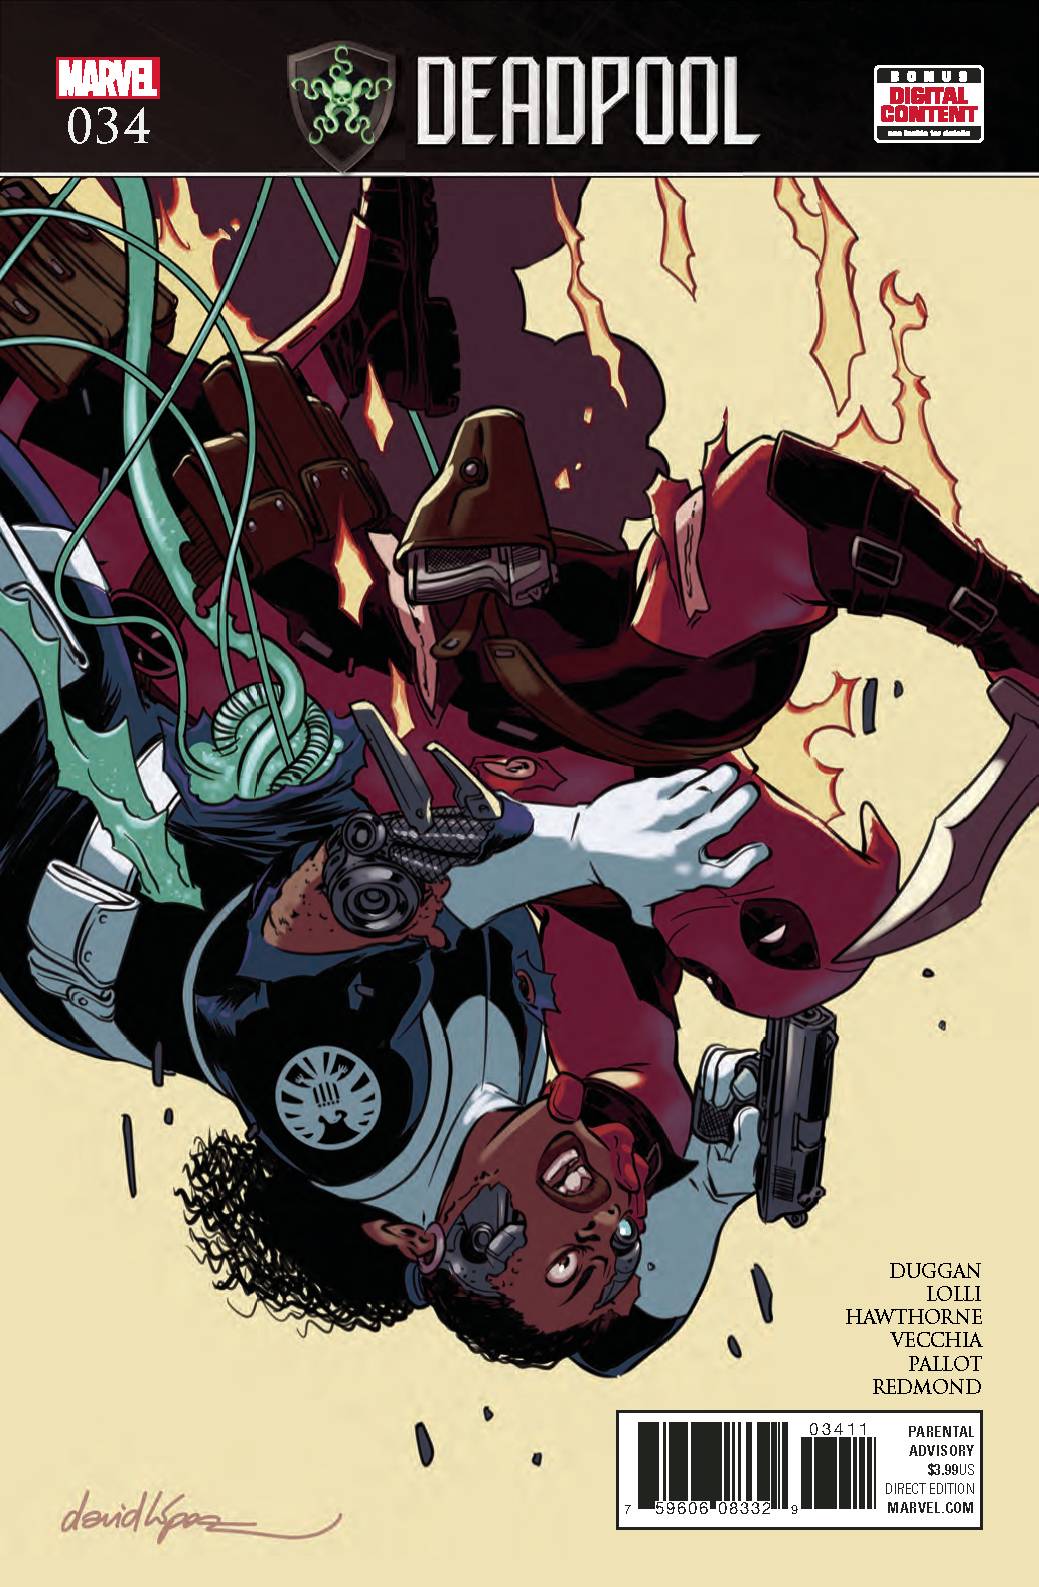 Deadpool #34 - State of Comics